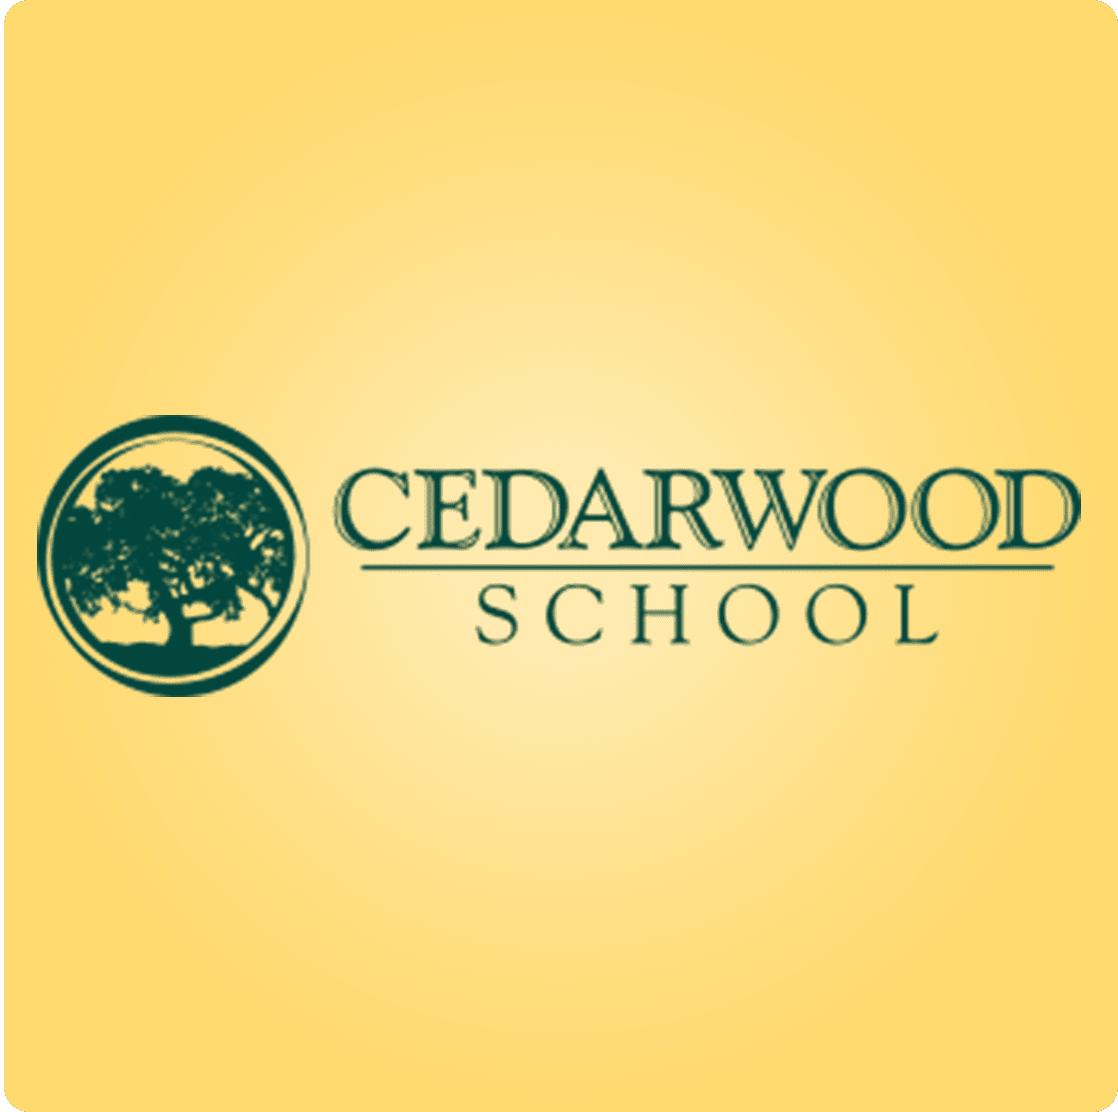 Cedarwood School